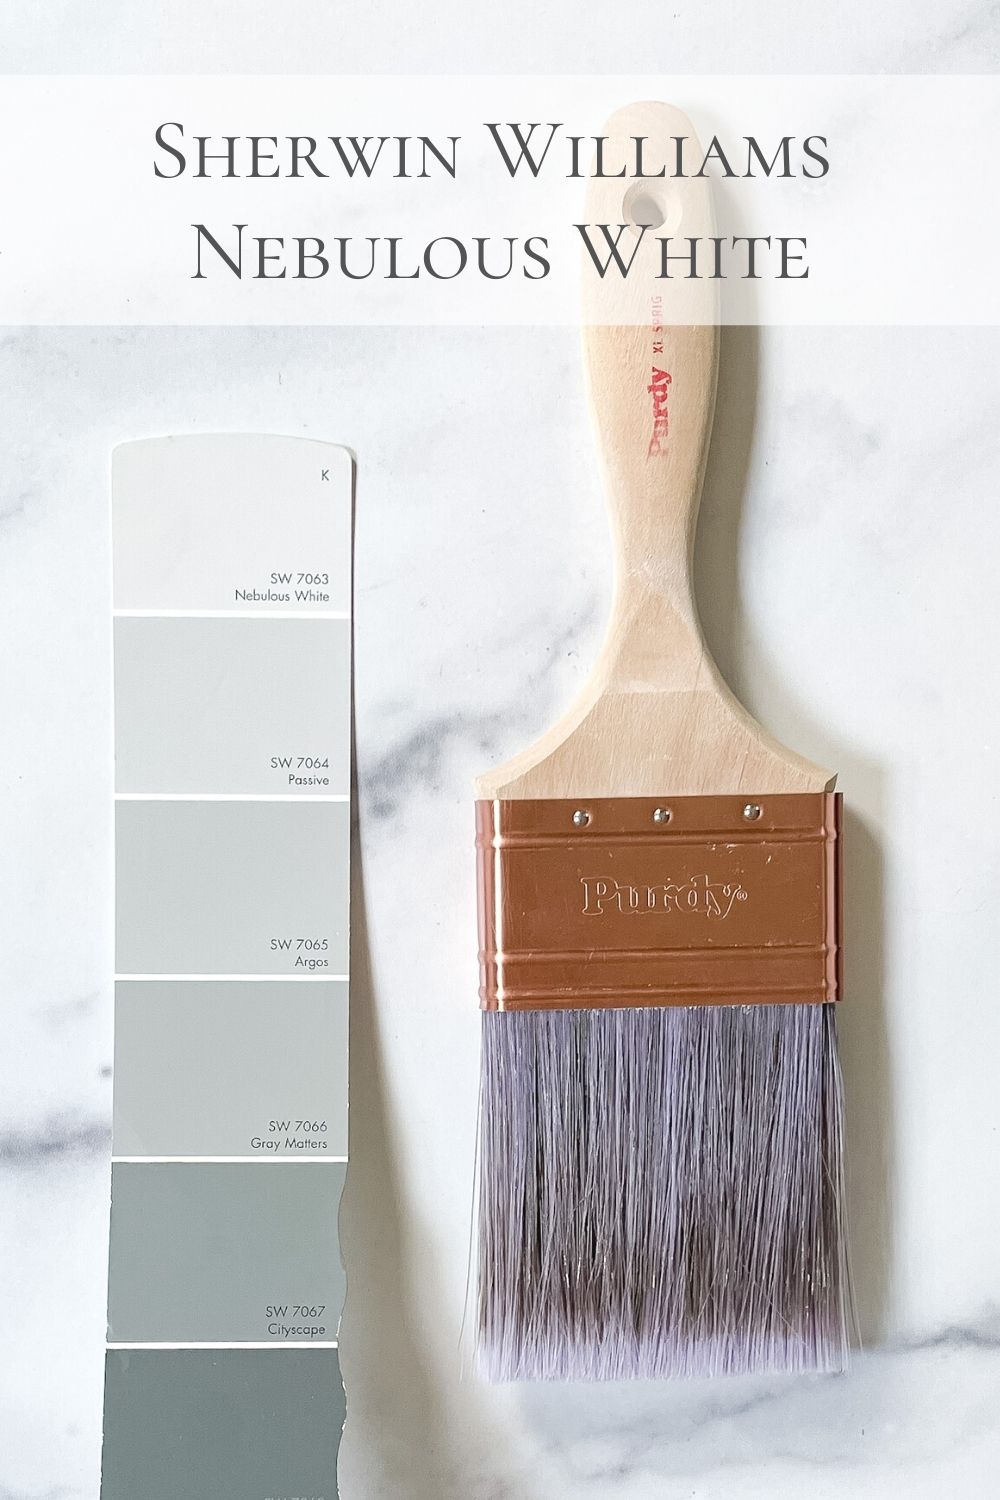 Sherwin williams nebulous white paint swatch with brush